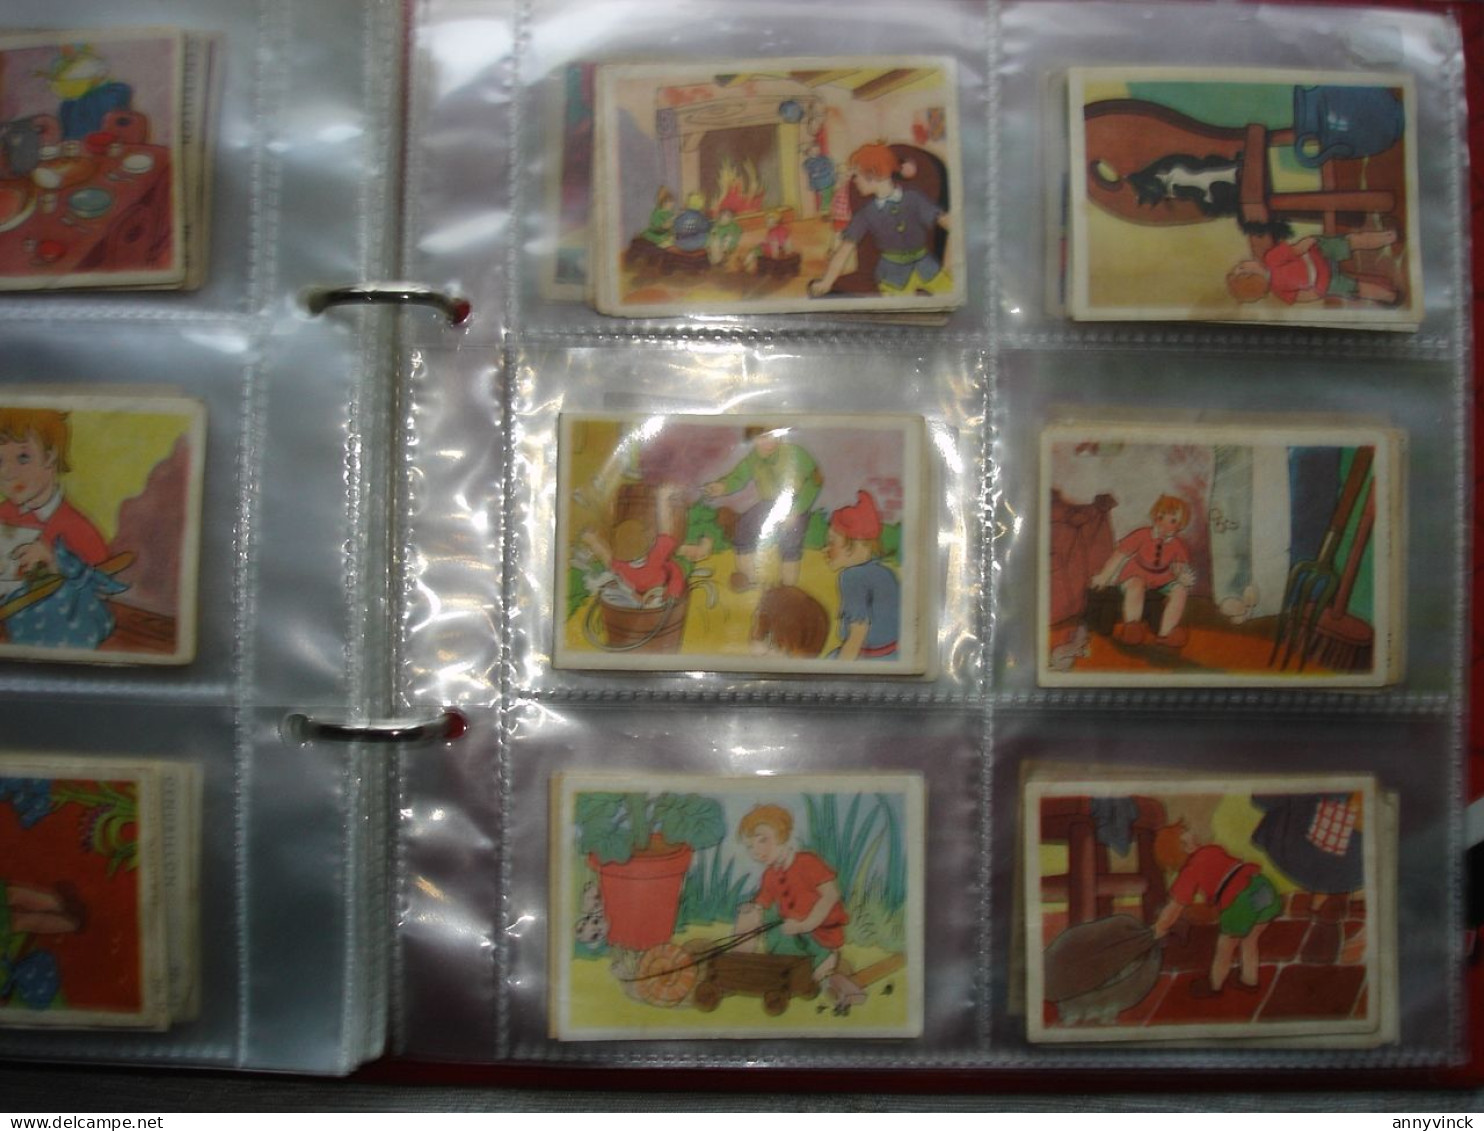 Verzameling prentjes (480) uitgave Chocolade Meurisse De Witte, Tijl Uilenspiegel, Assepoester, Roodkapje, Kl Duimpje